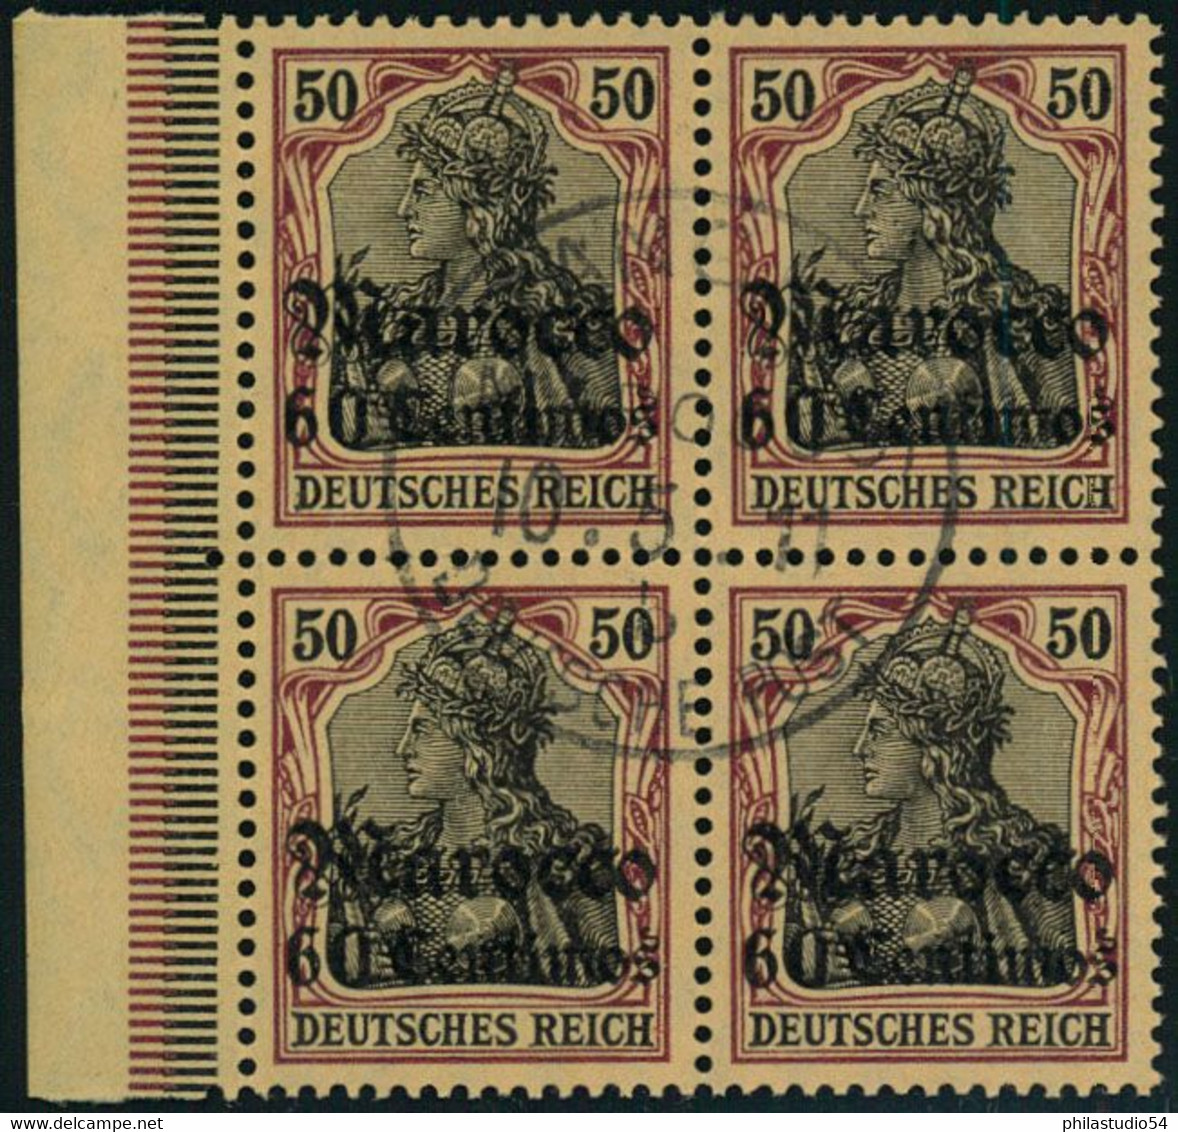 1911, 60 Centimes Auf 50 Pfg. Germania Im Viererblock Mit Seltenem Stempel TANGER MAROCCO. - Marruecos (oficinas)